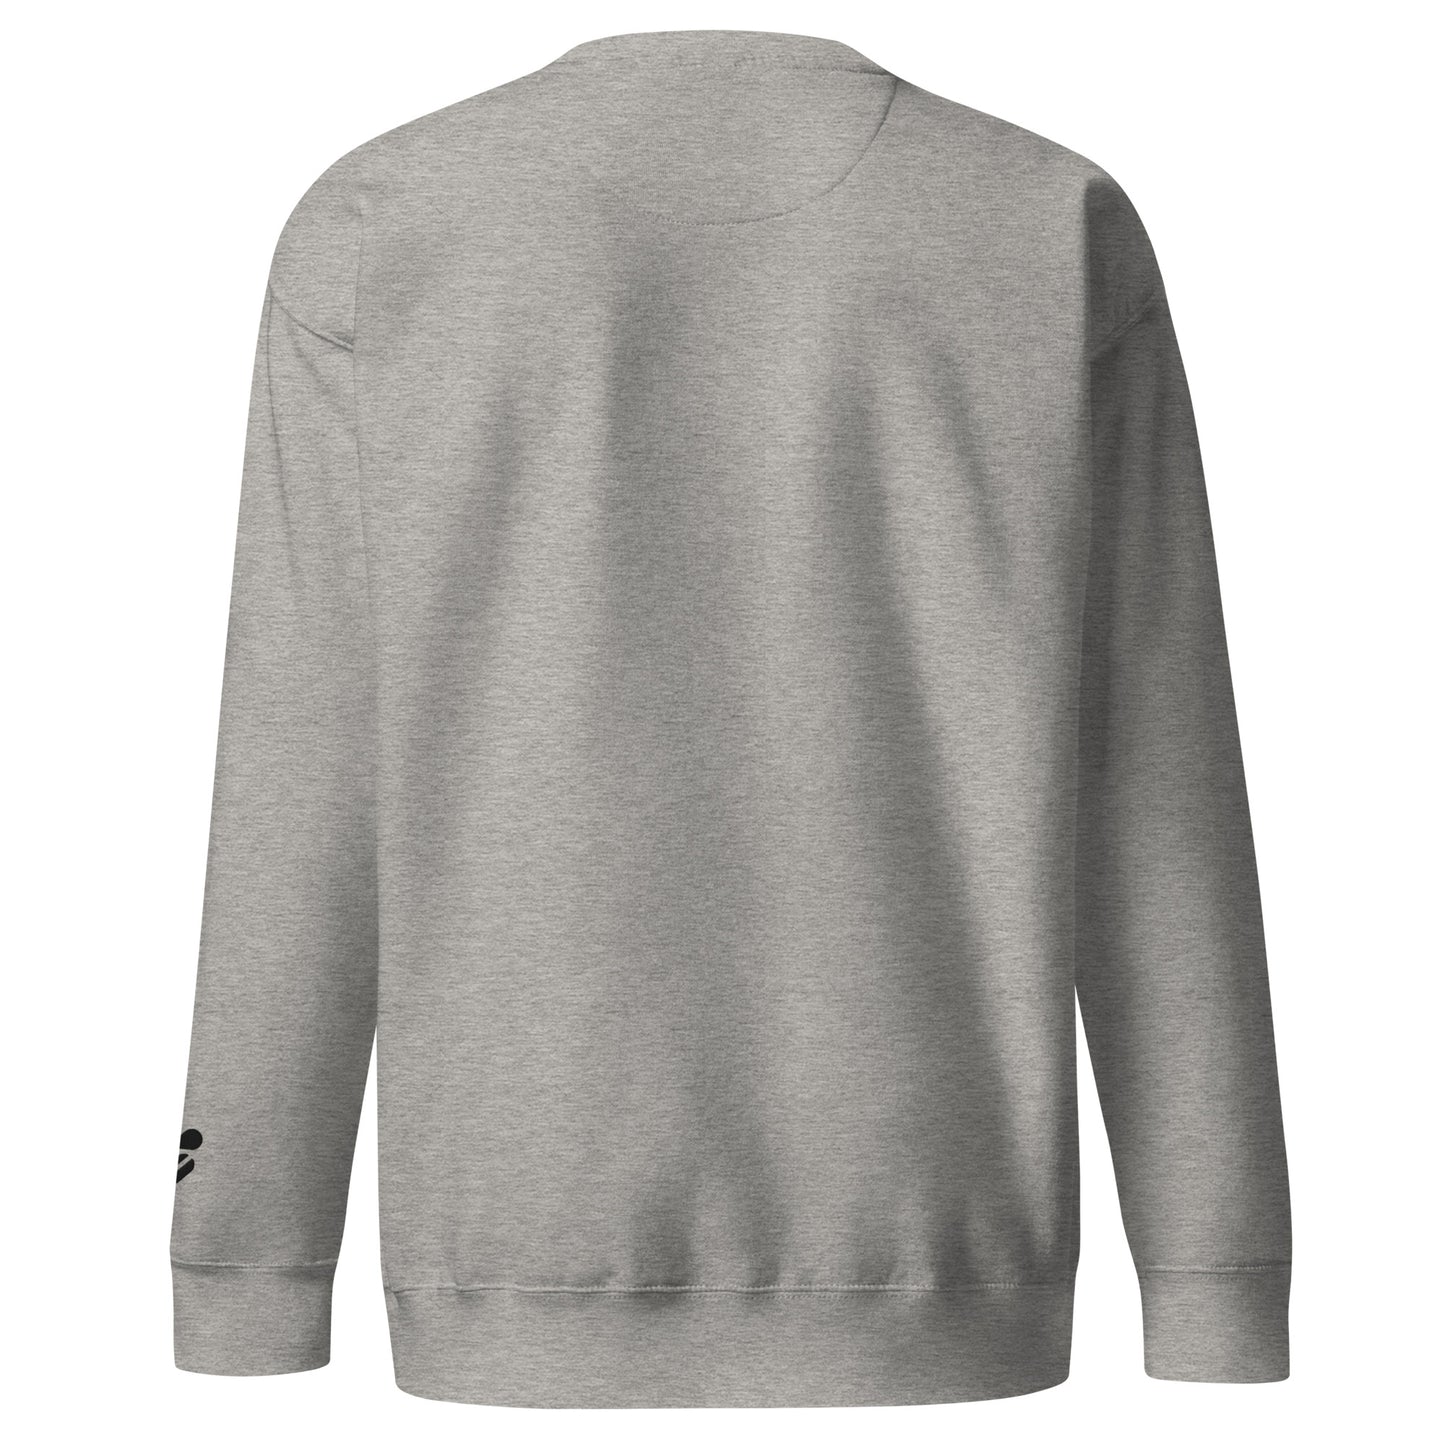 SOULSKY Classic Crew Sweatshirt - Light Gray